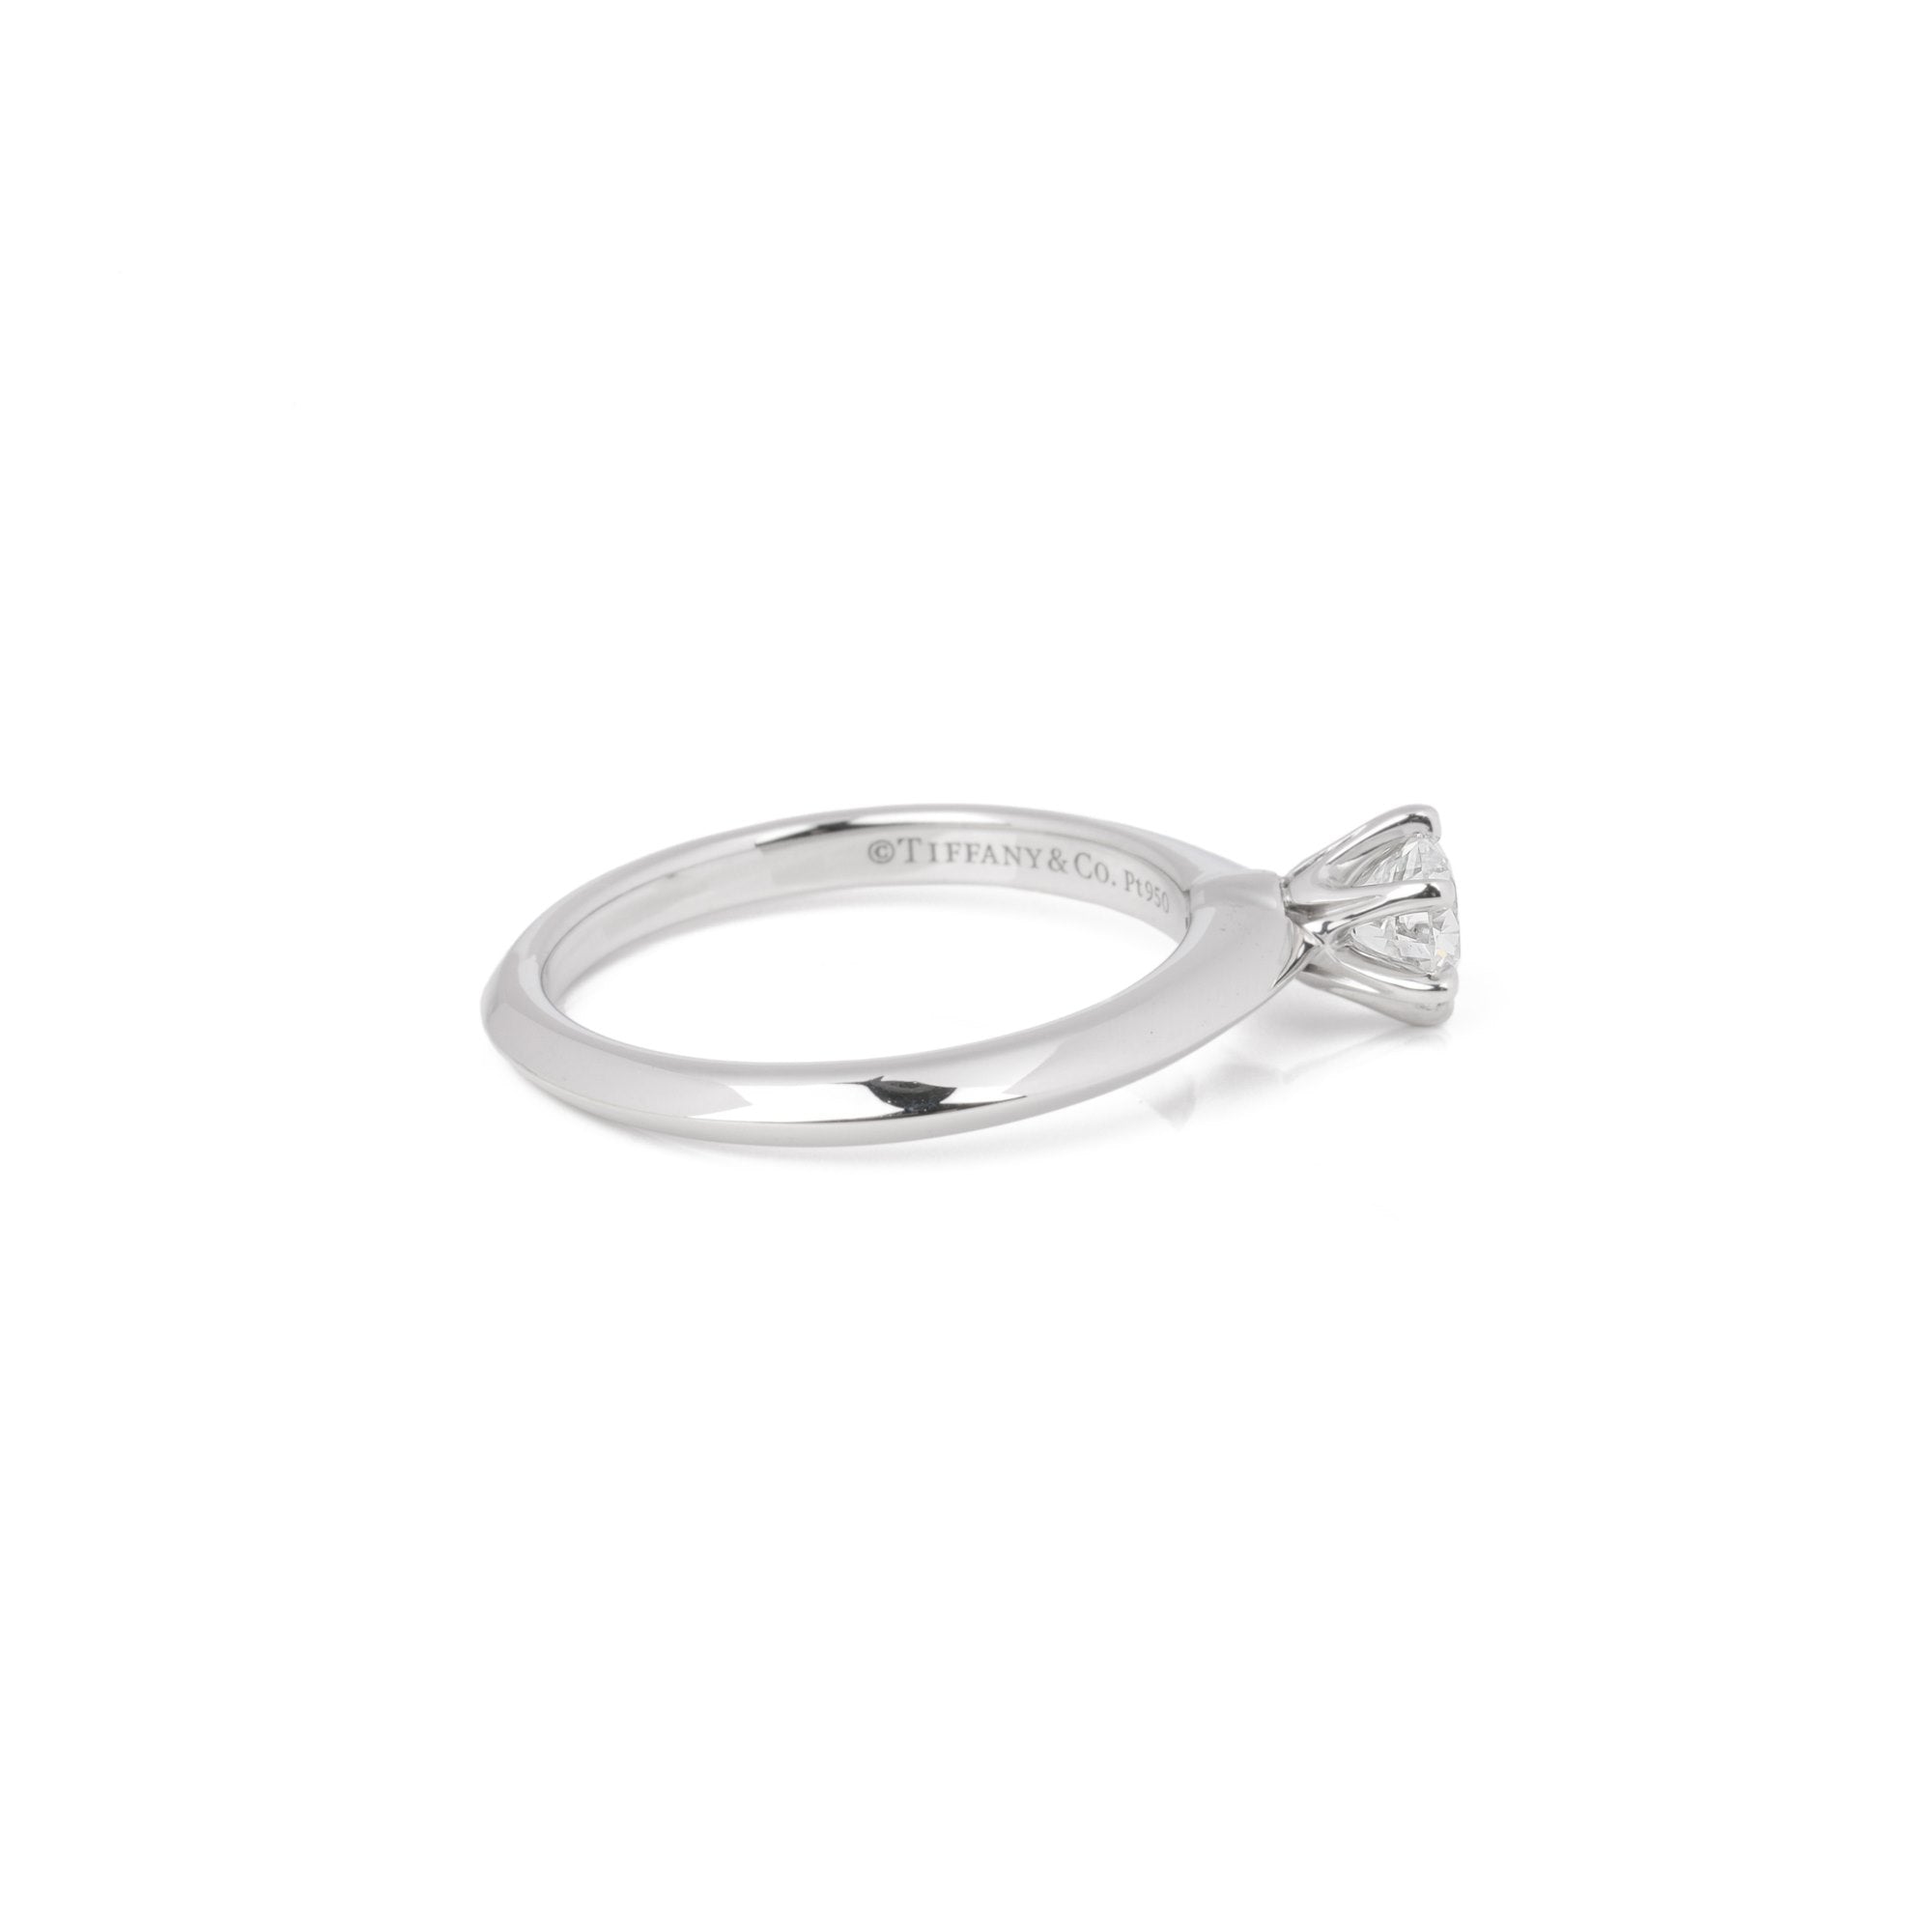 Tiffany & Co Tiffany Setting 038ct Diamond Solitaire Ring